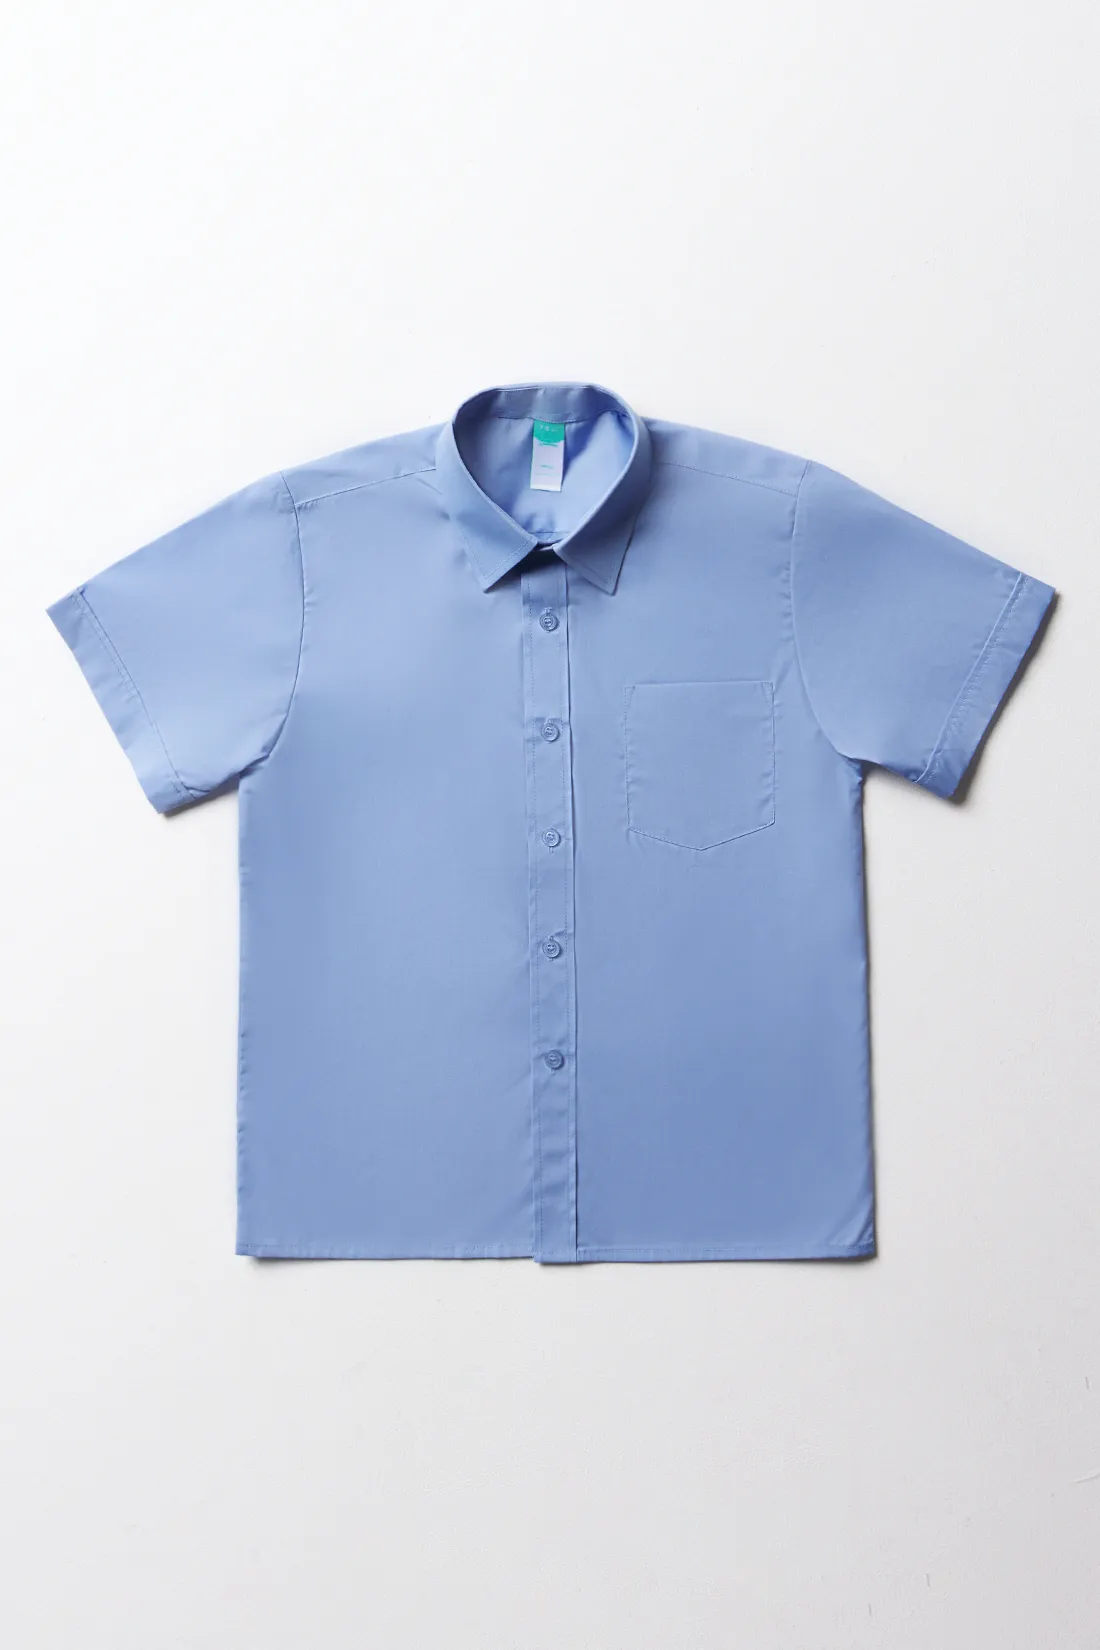 Unisex short sleeve collar shirt blue - Kids's School Clothes | Ackermans